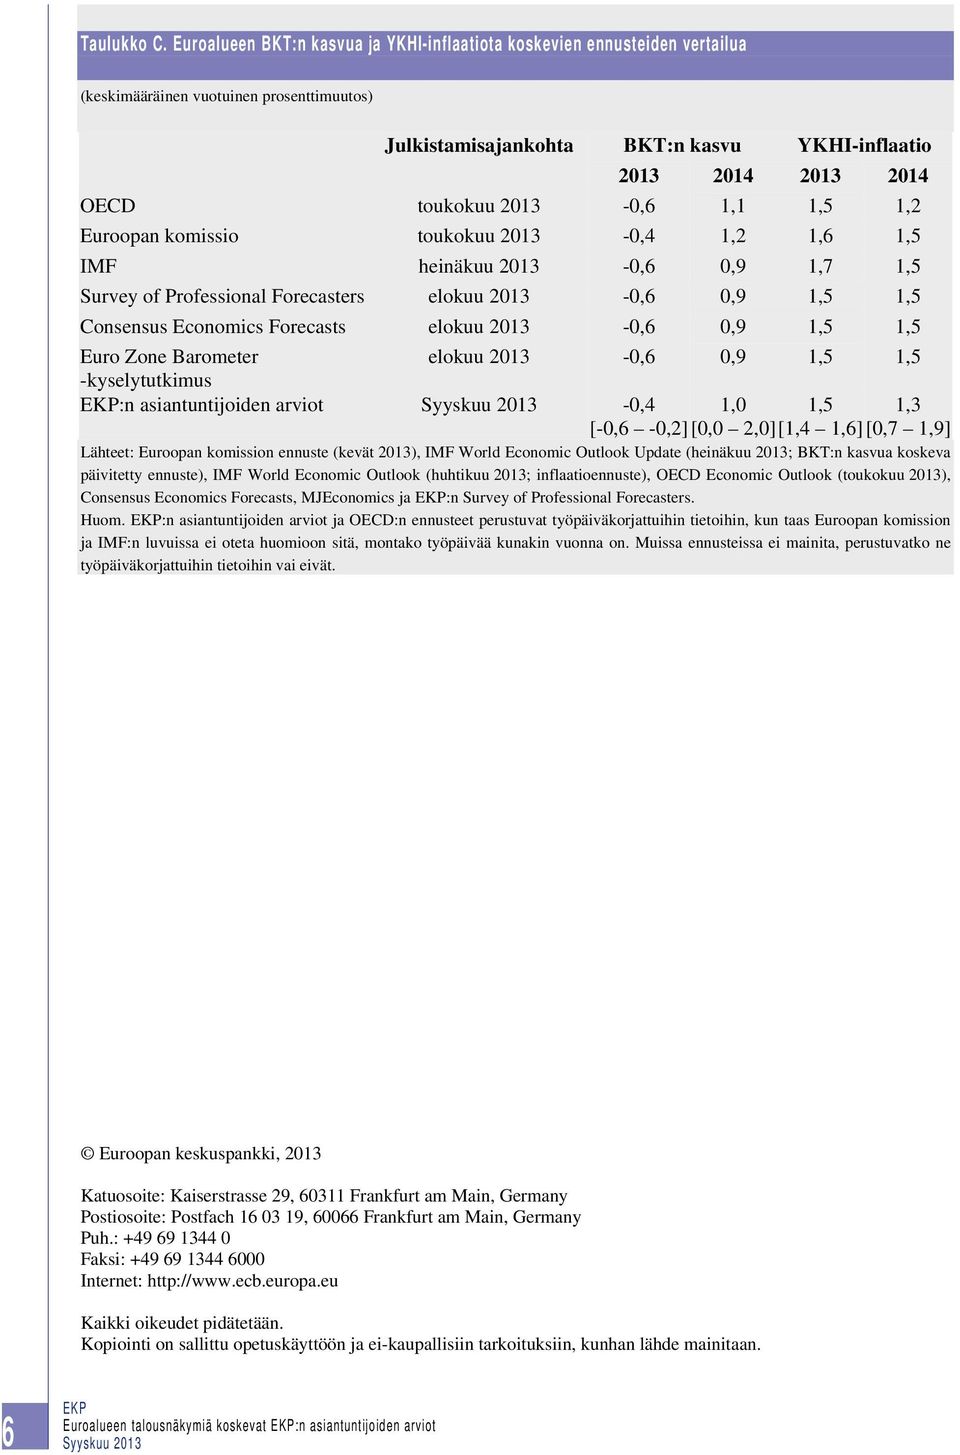 toukokuu 2013-0,4 1,2 1,6 1,5 IMF heinäkuu 2013-0,6 0,9 1,7 1,5 Survey of Professional Forecasters elokuu 2013-0,6 0,9 1,5 1,5 Consensus Economics Forecasts elokuu 2013-0,6 0,9 1,5 1,5 Euro Zone